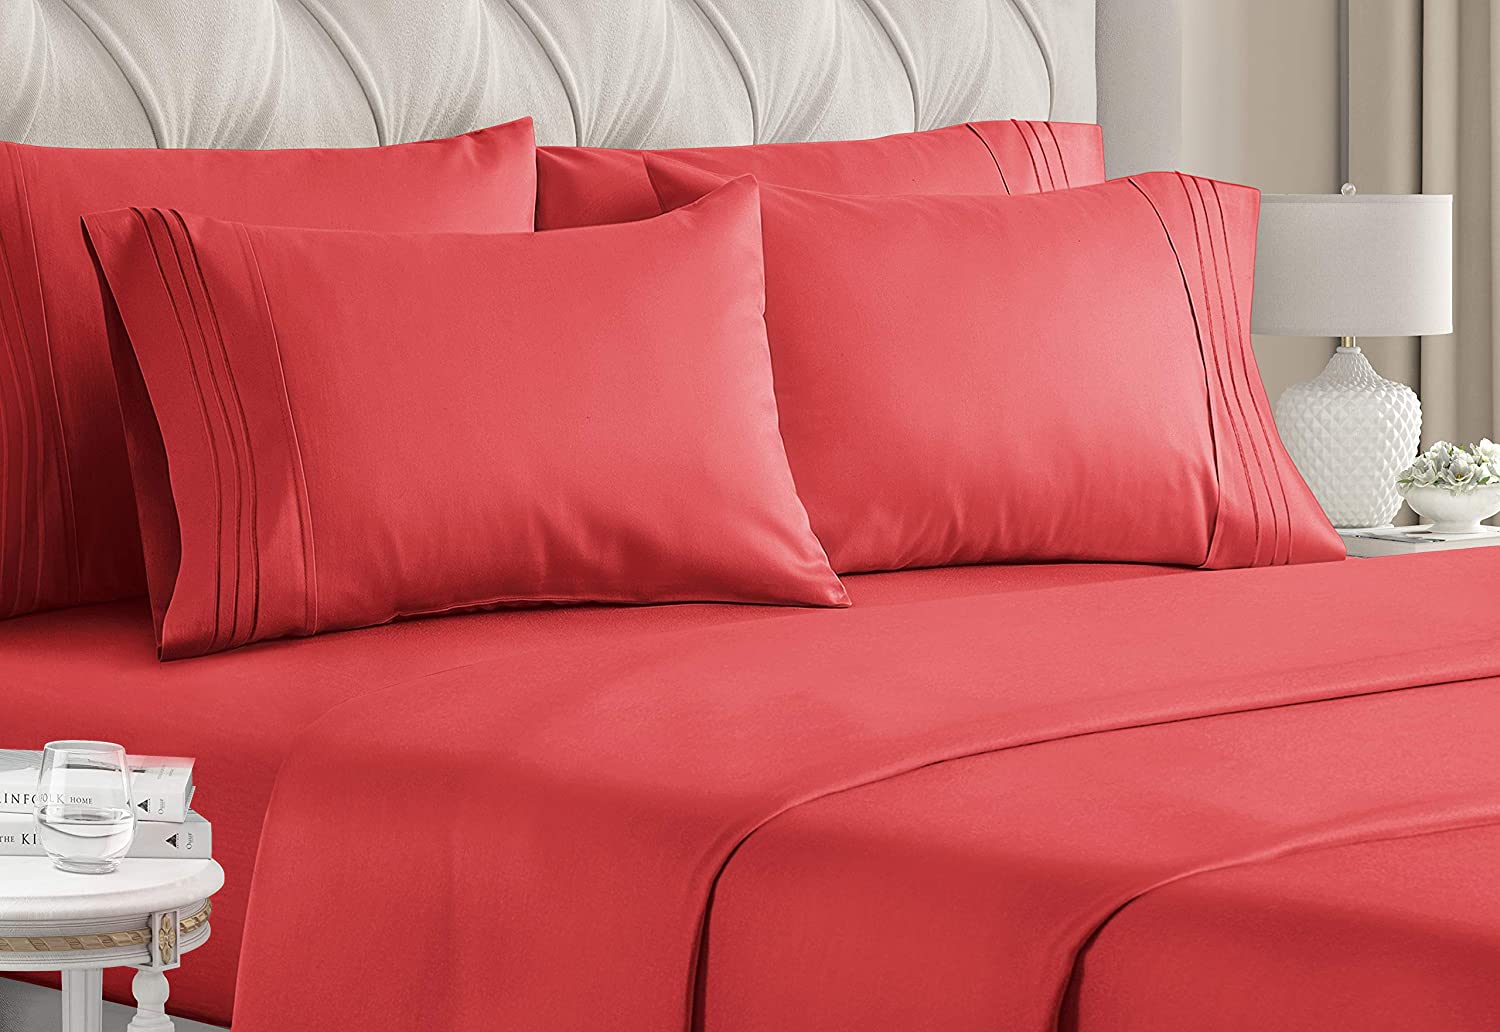 6 Piece Set Deep Extra Soft King Size Sheet Set Hotel Luxury Bed Sheets 